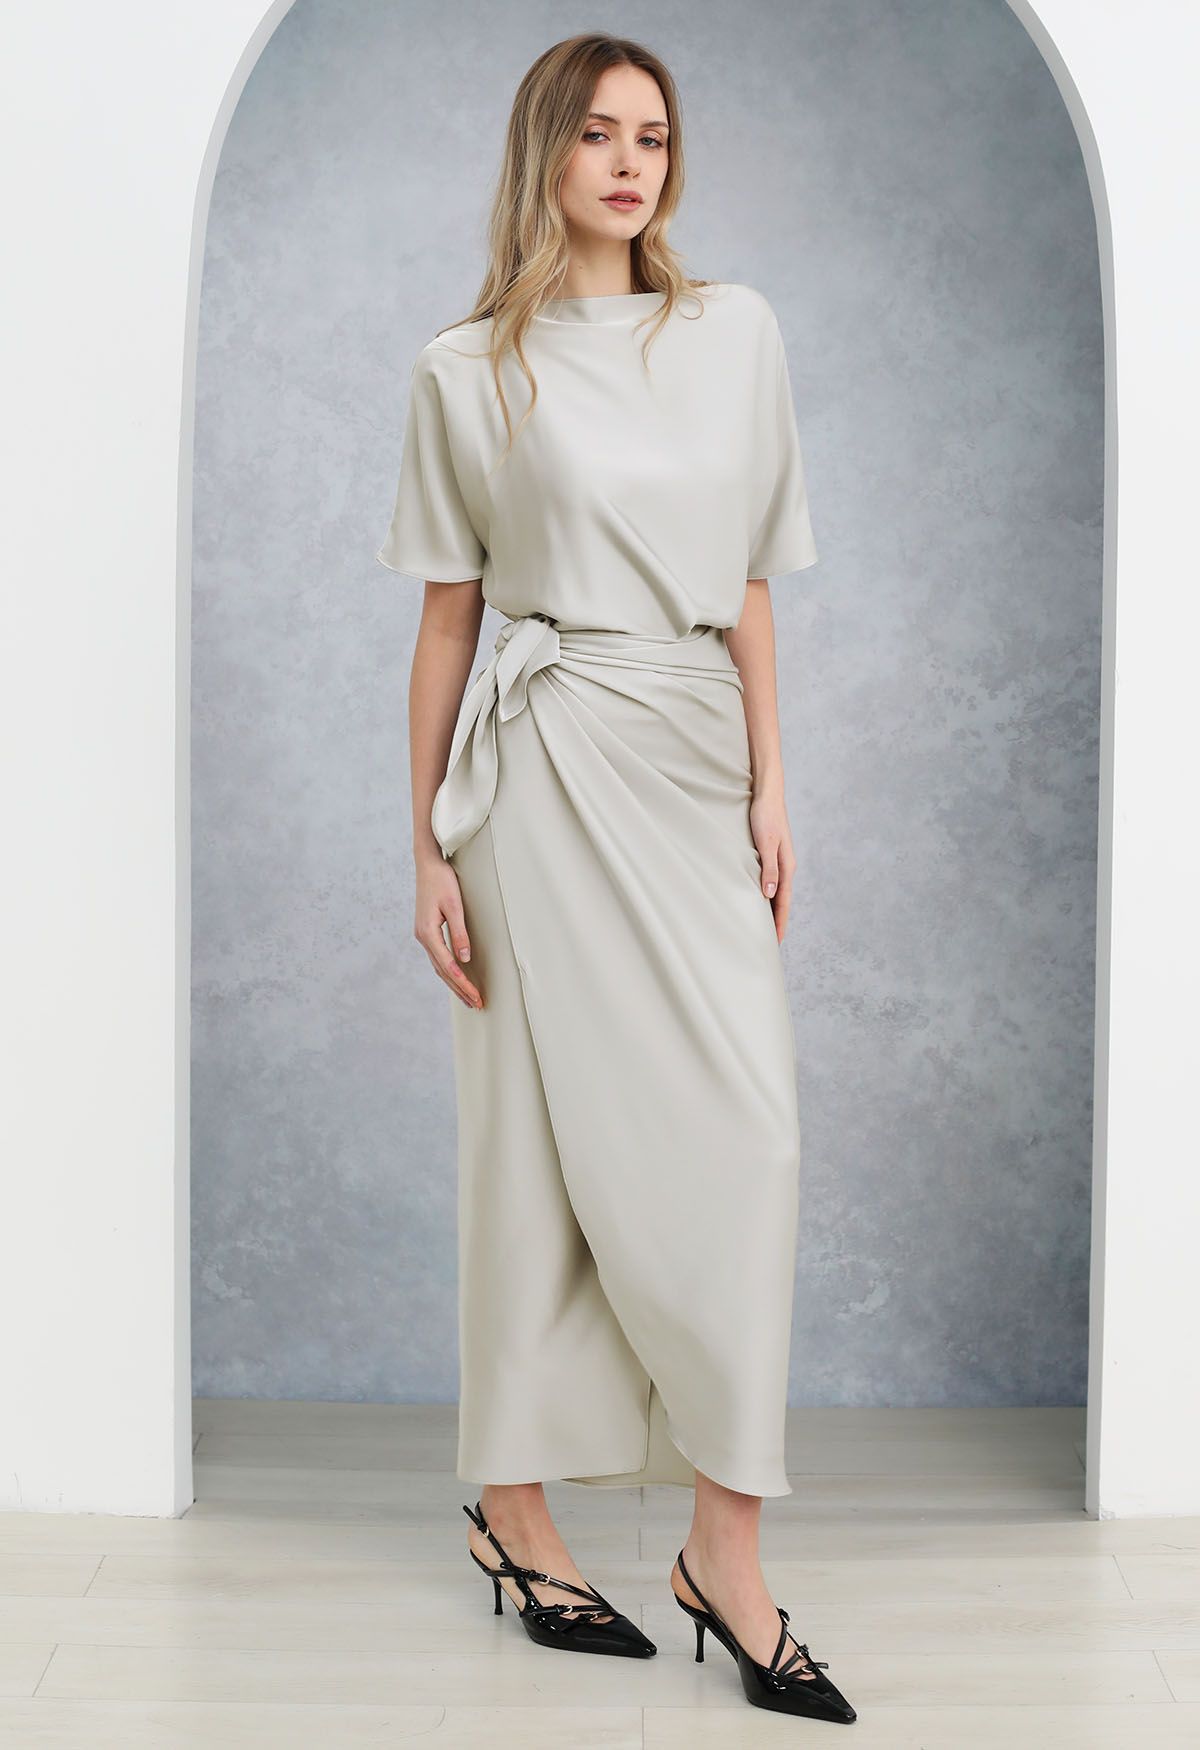 Satin Short-Sleeve Wrapped Waist Maxi Dress in Ivory